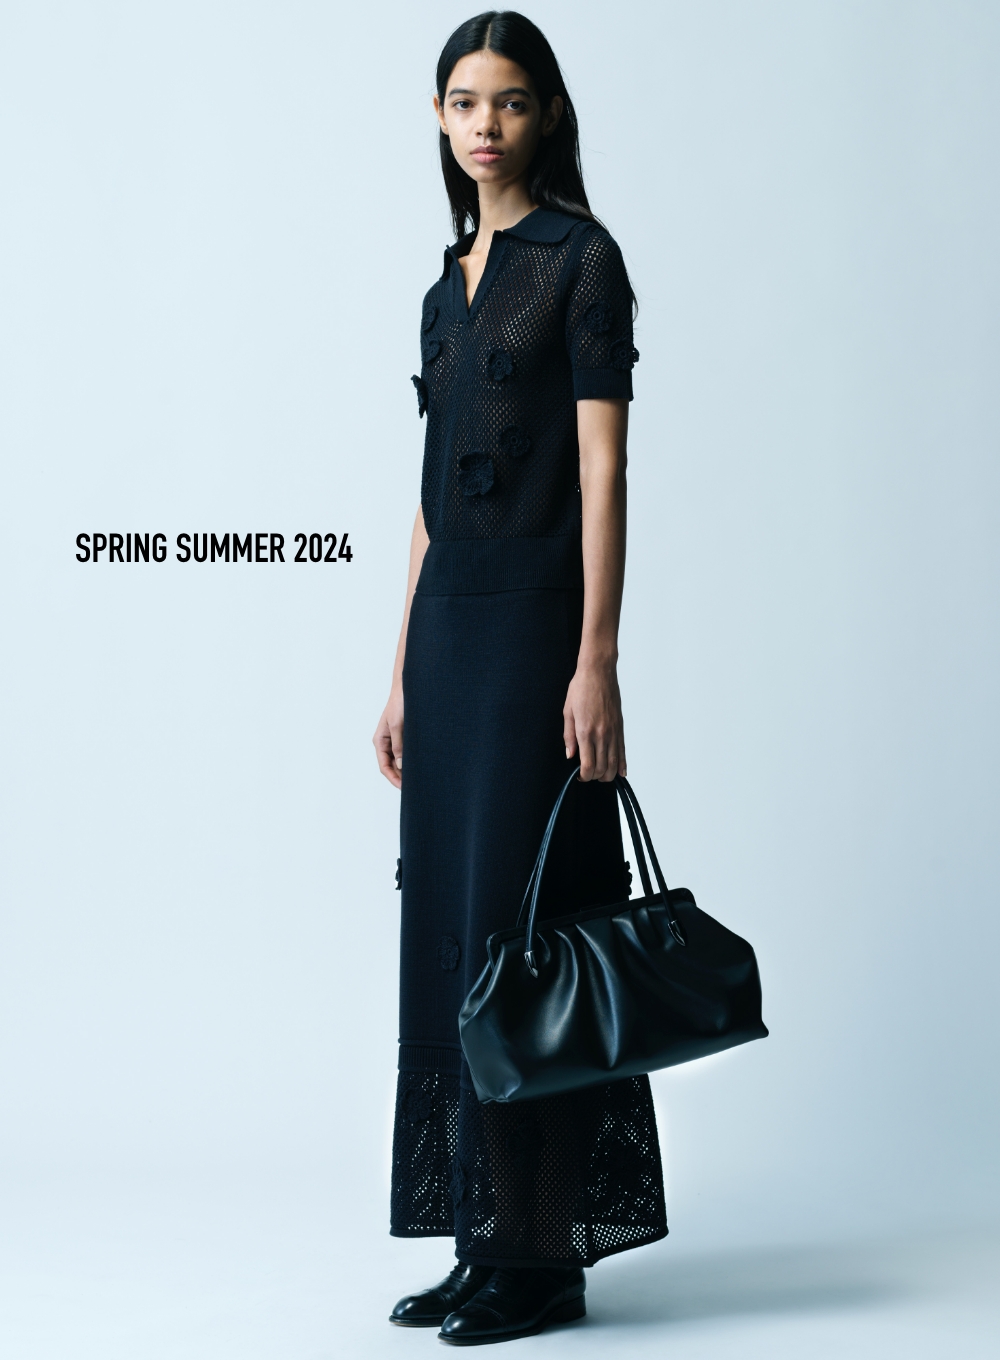 SPRING SUMMER 2024　プルオーバー,スカート,バッグを着用した女性の写真